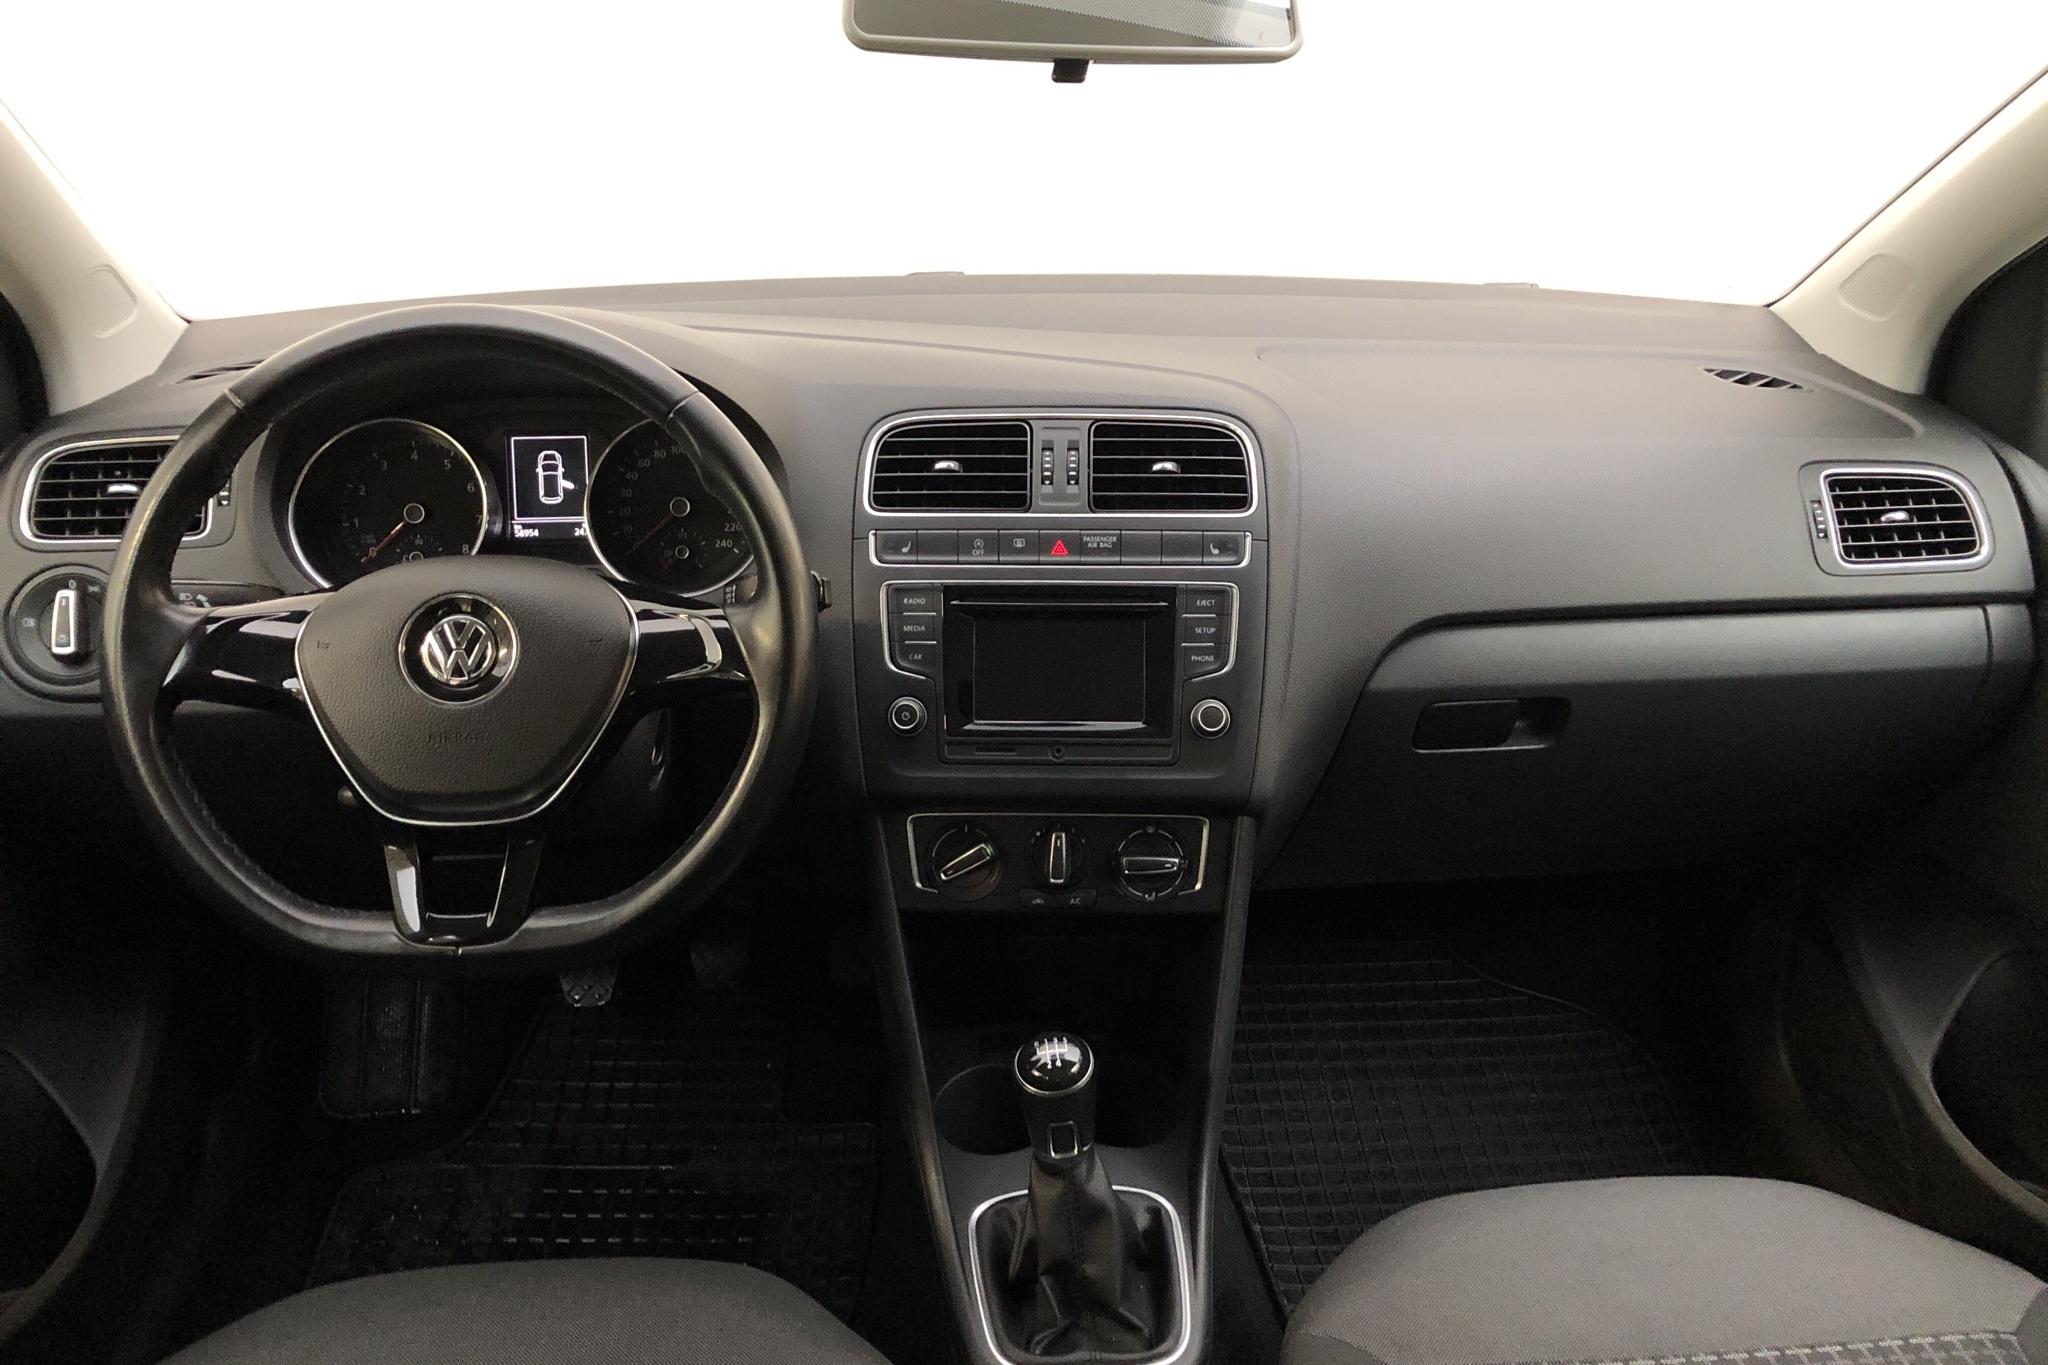 VW Polo 1.2 TSI 5dr (90hk) - 5 895 mil - Manuell - silver - 2017